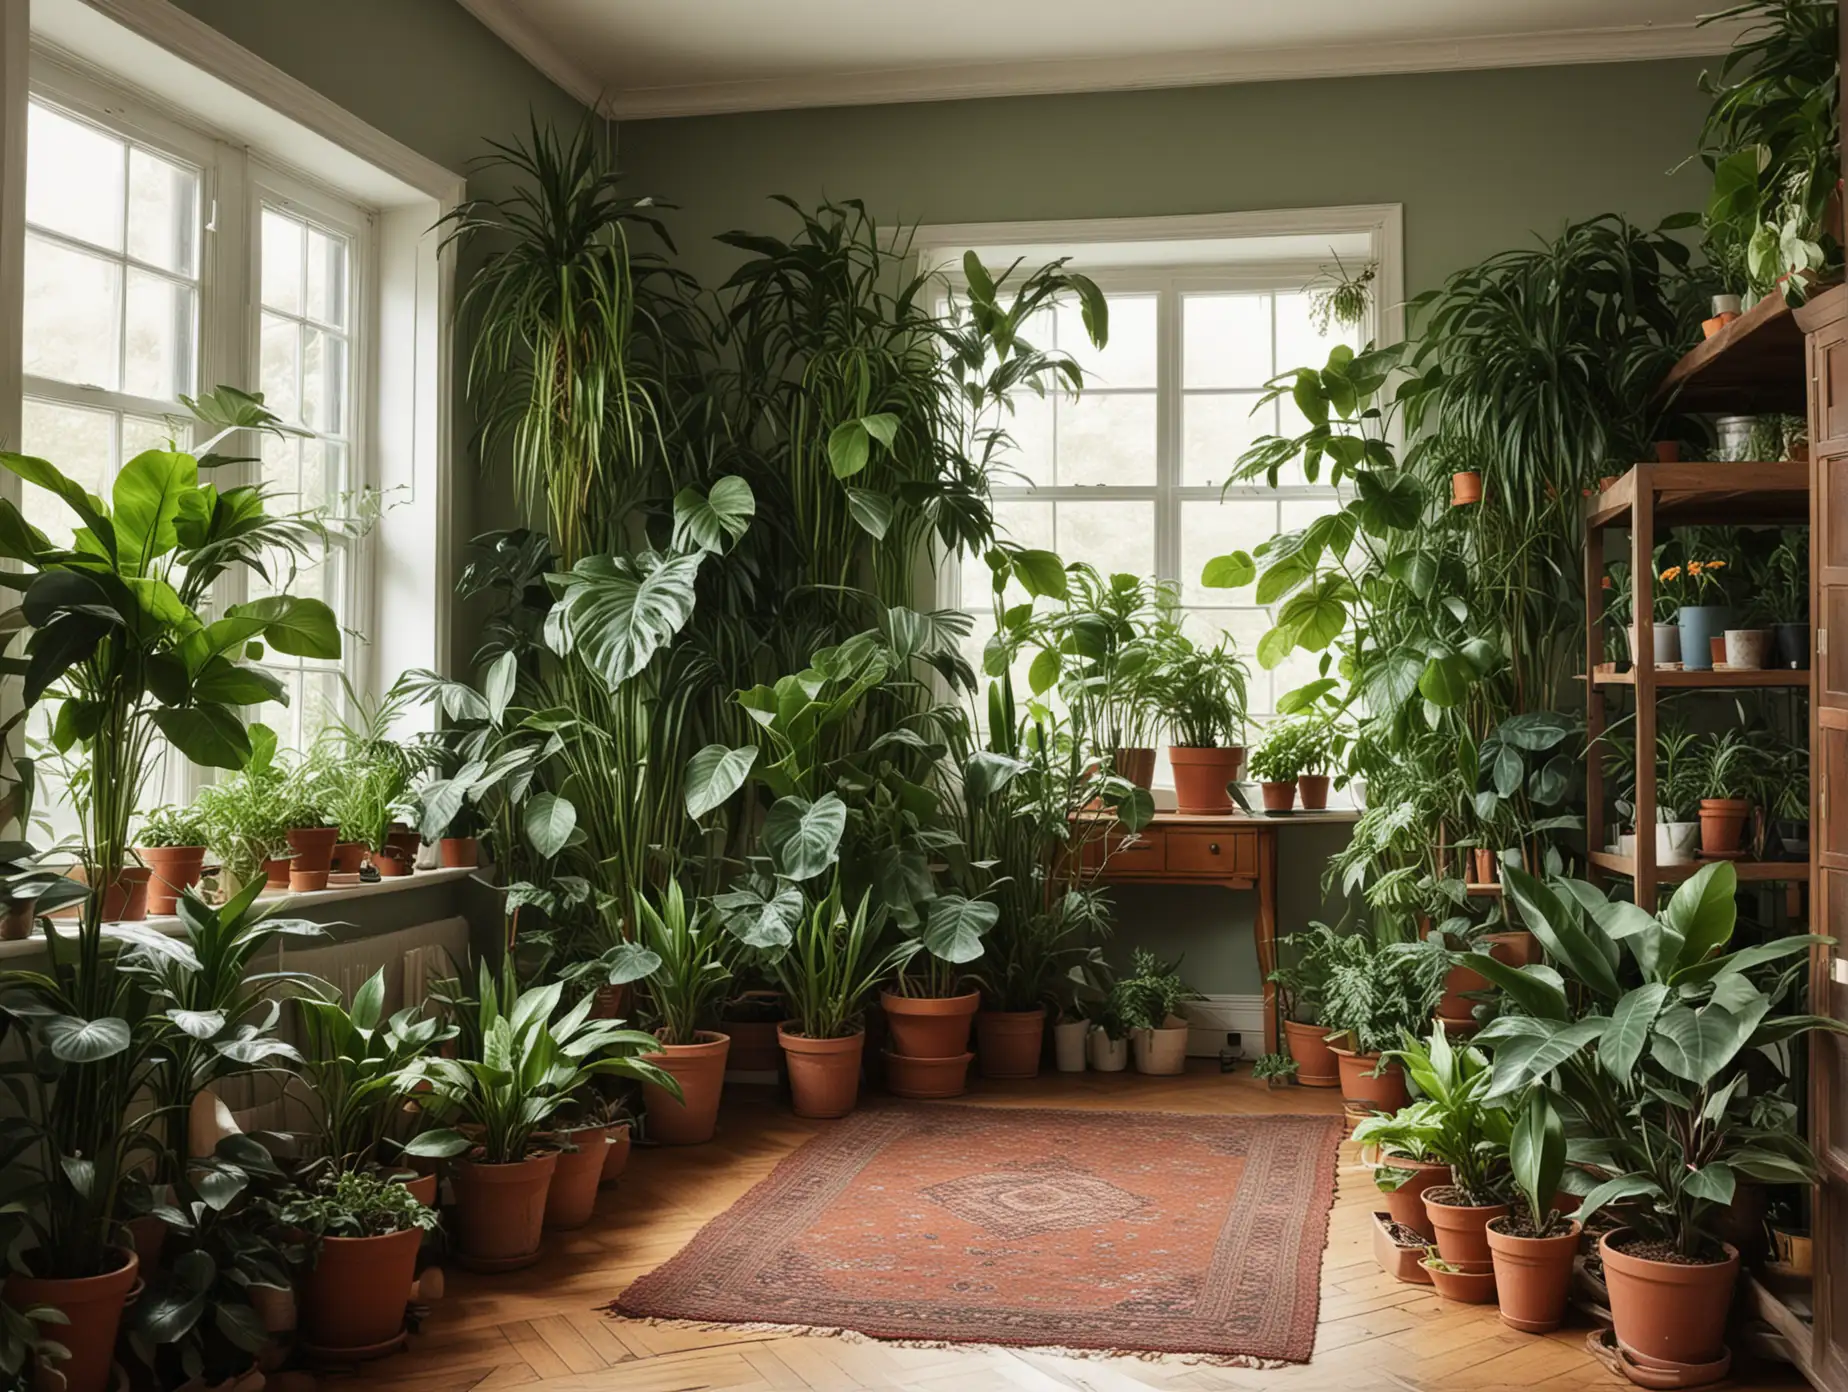 Create me image of room full of houseplants